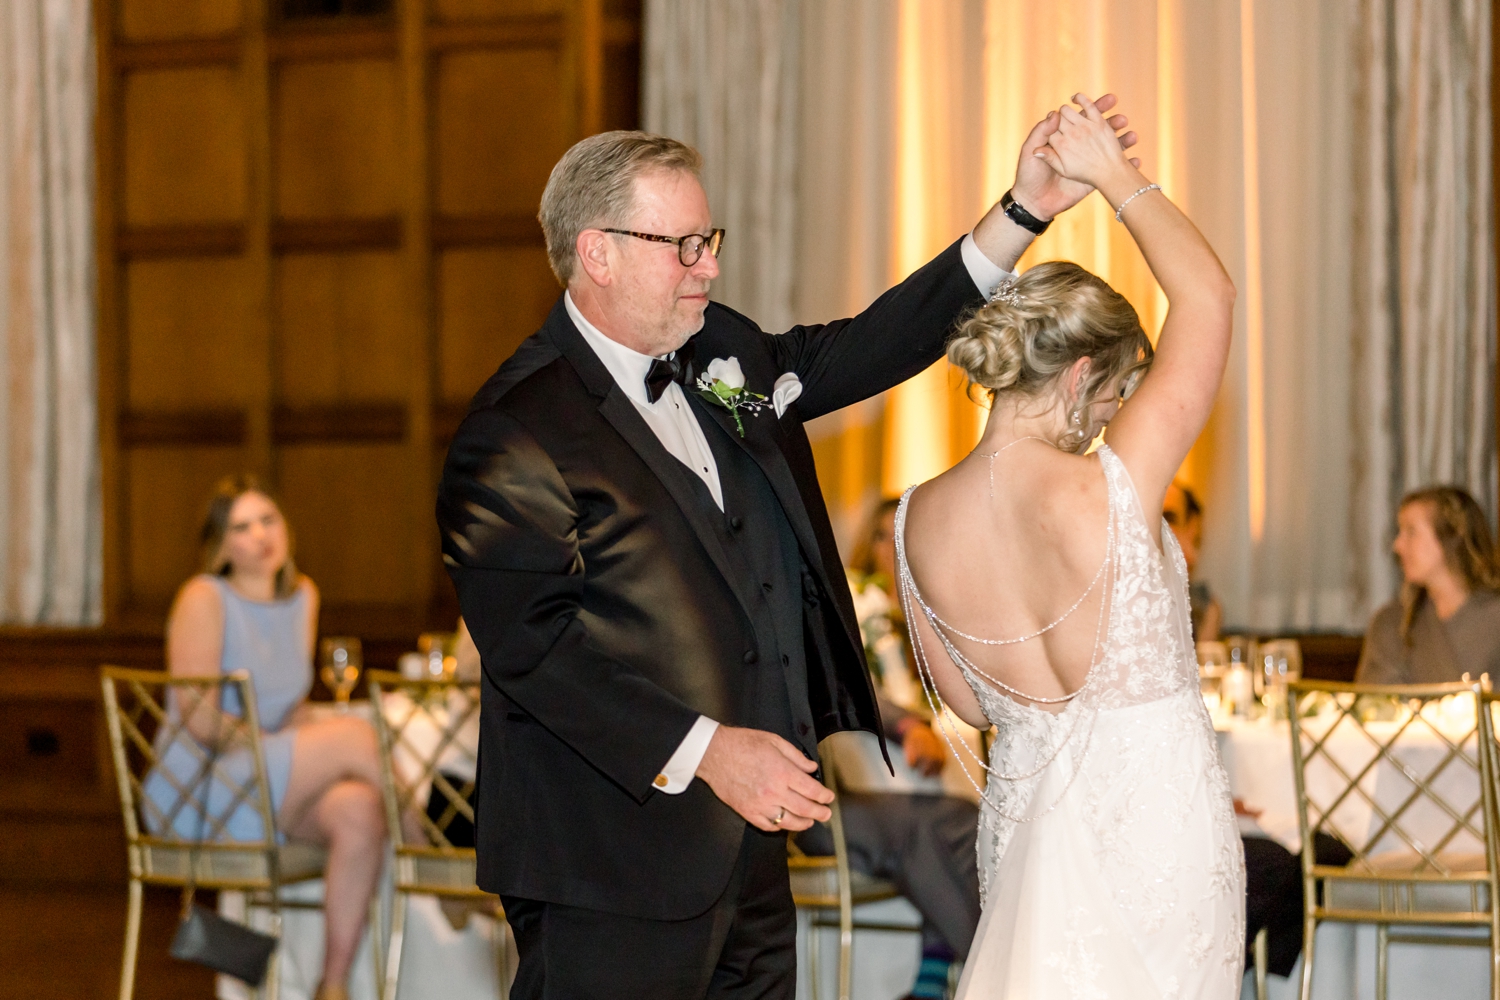 Bride and Dad First Dance at The Cincinnati Club Wedding Reception